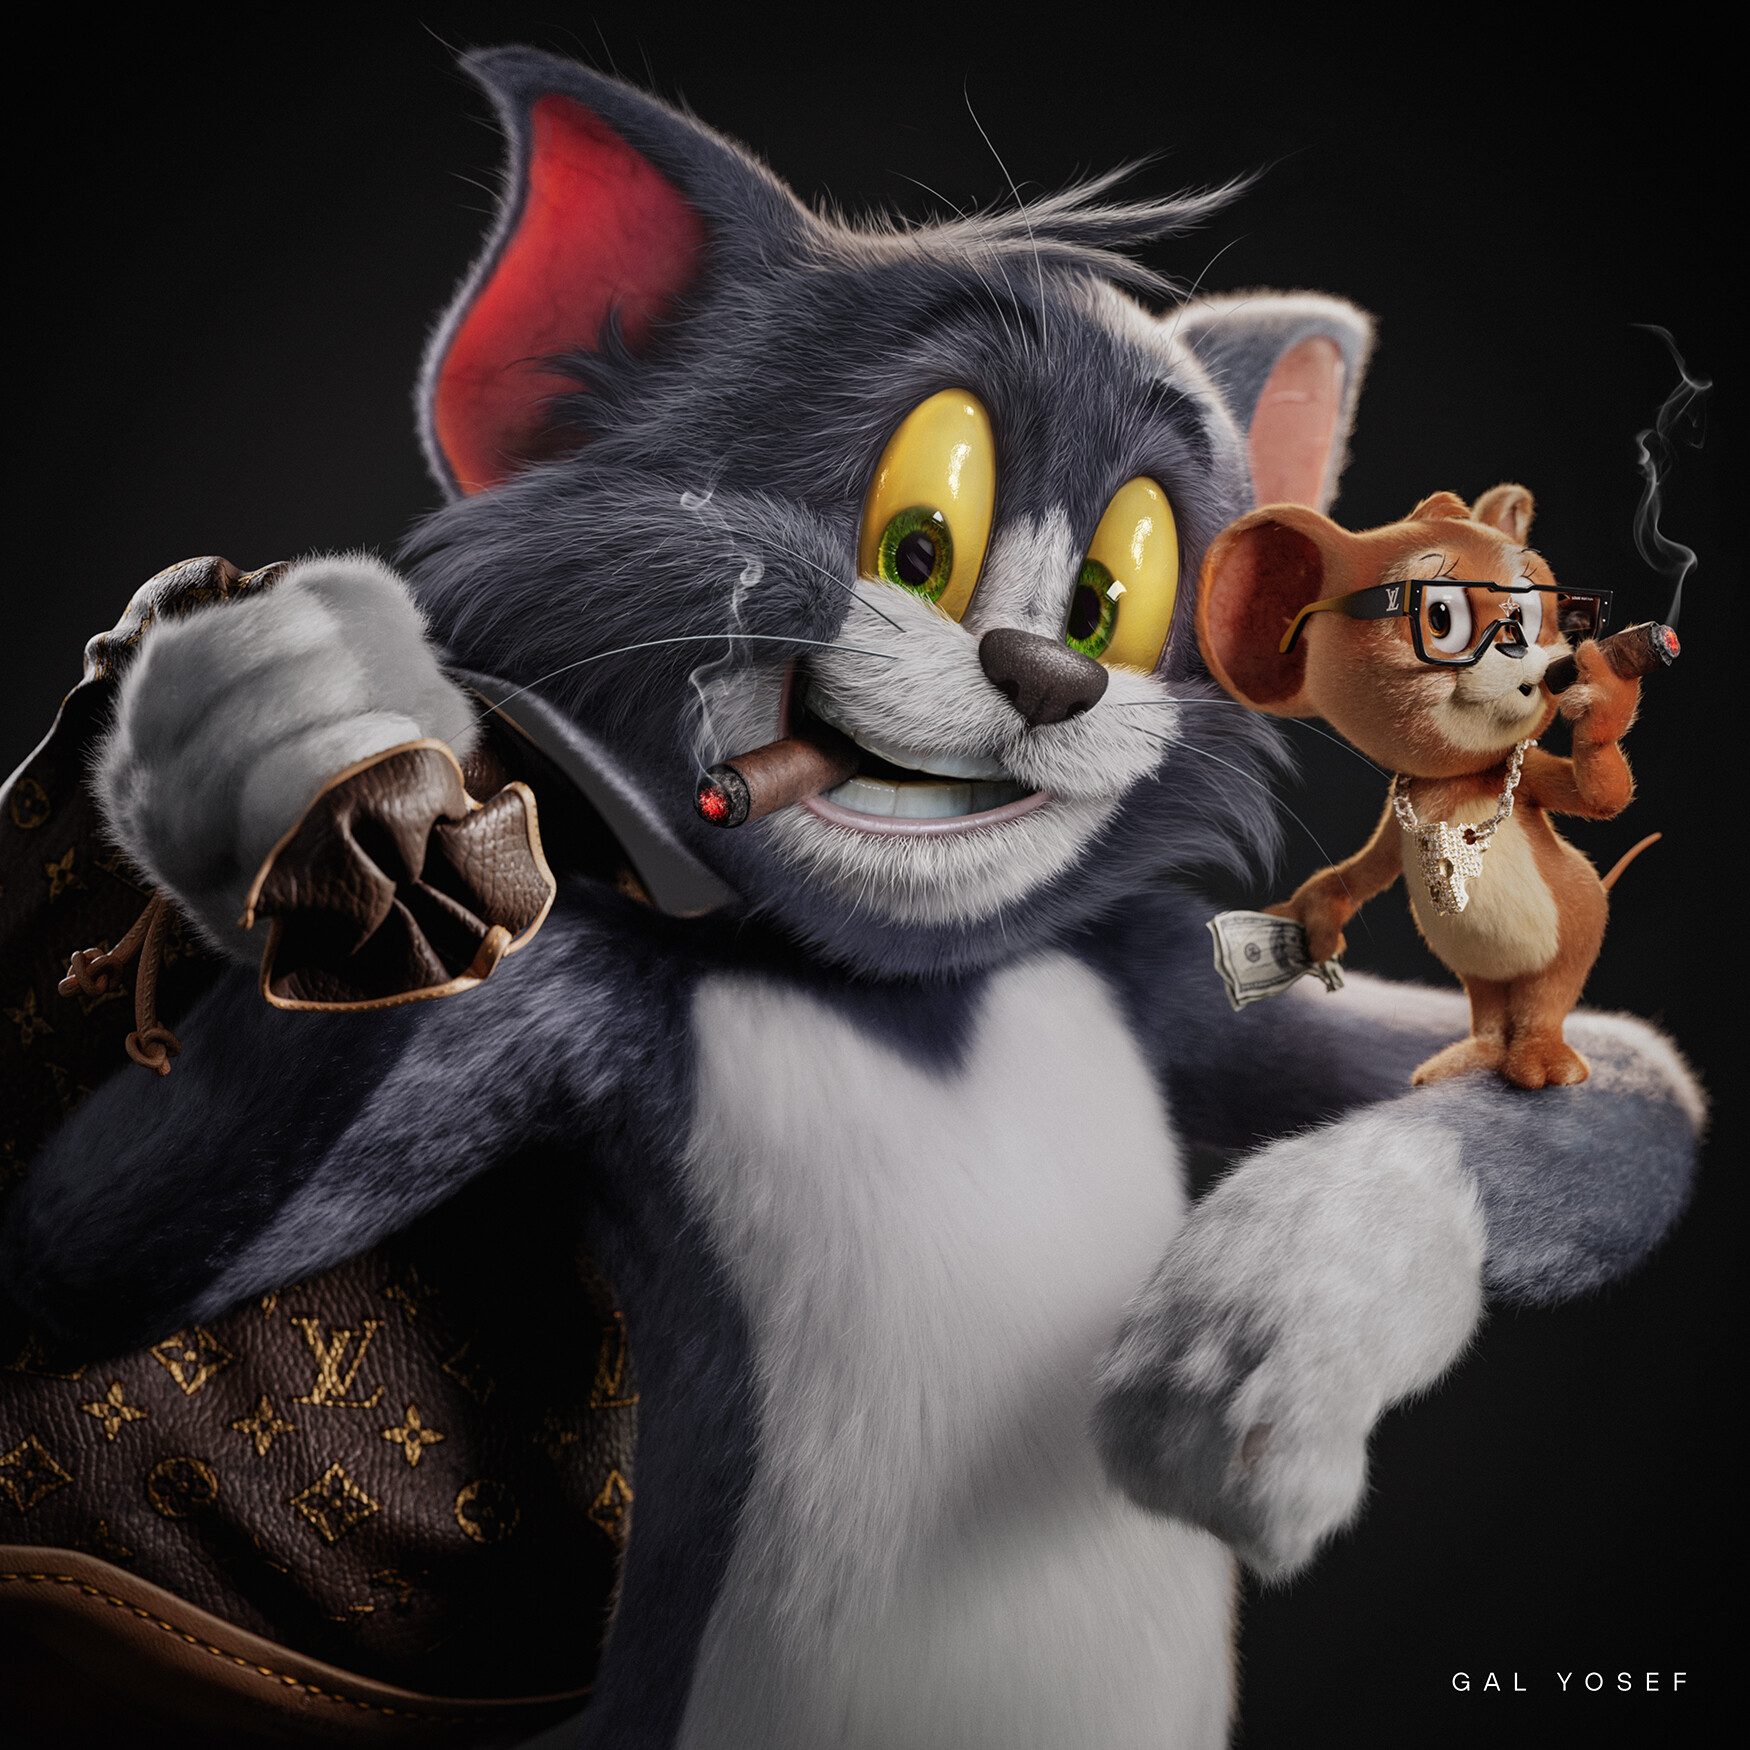 General 1750x1750 artwork digital art Tom and Jerry Gal Yosef cats mice cartoon cigars smoking looking at viewer